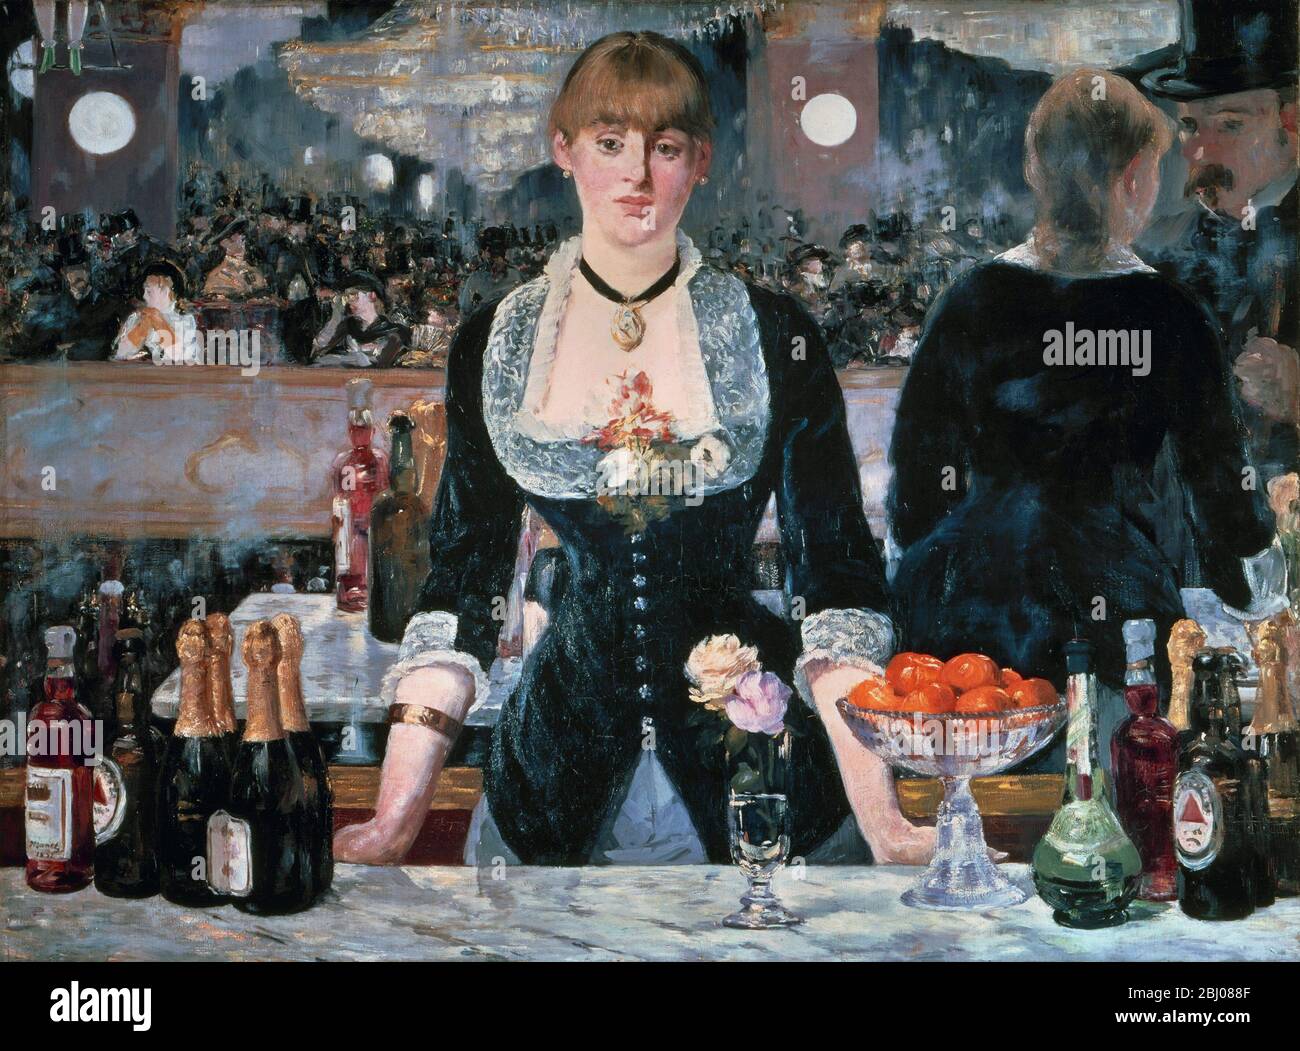 Un Bar al Folies-Bergere - un bar aux Folies Bergere - olio su tela di Edouard Manet, 1882 - dipinto ed esposto al Salone di Parigi nel 1882. Foto Stock